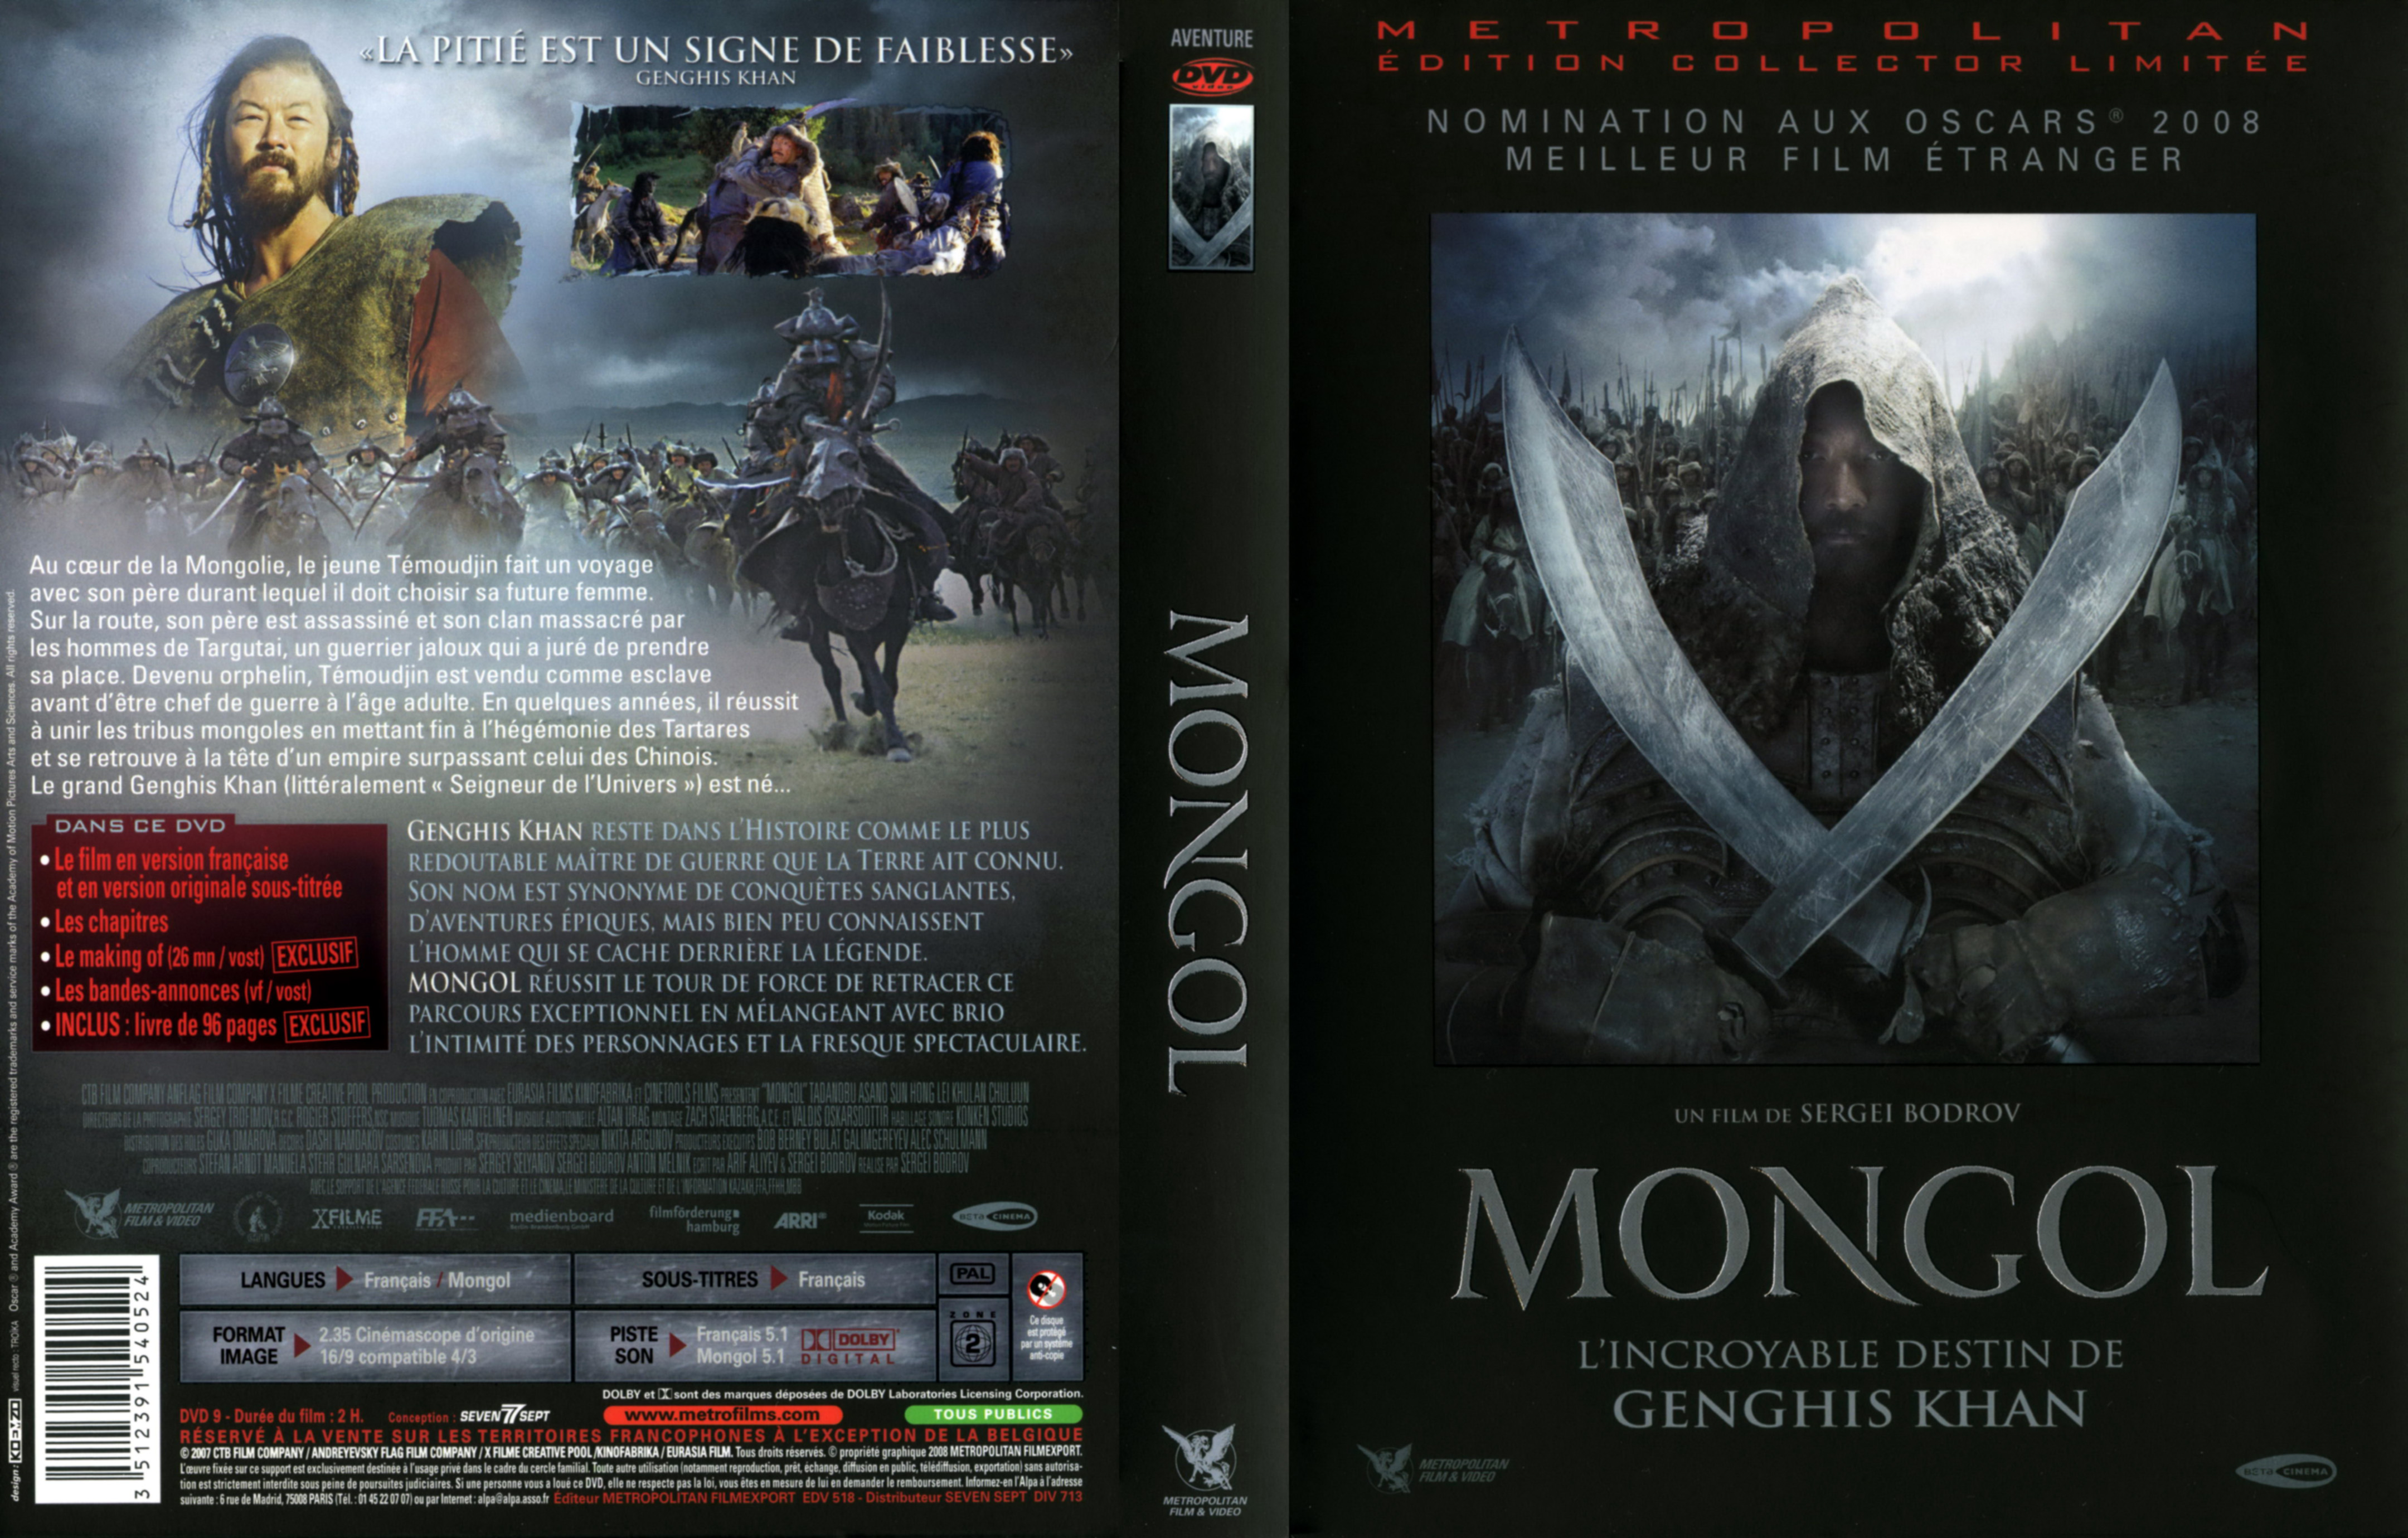 Jaquette DVD Mongol v3